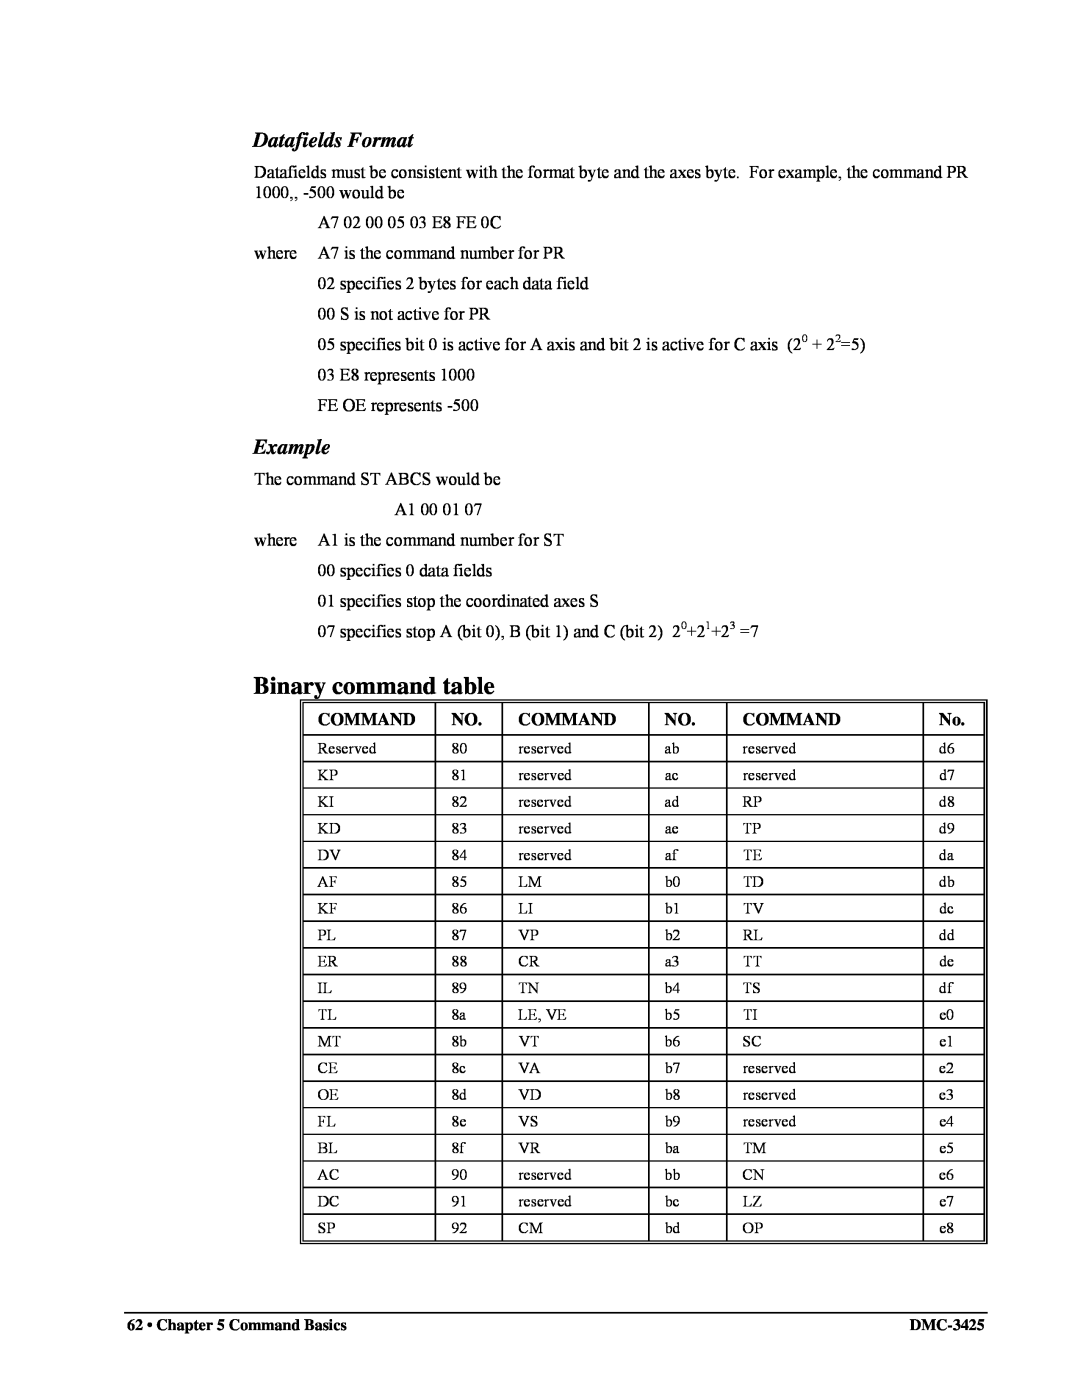 Galil DMC-3425 user manual Binary command table, Datafields Format, Example 